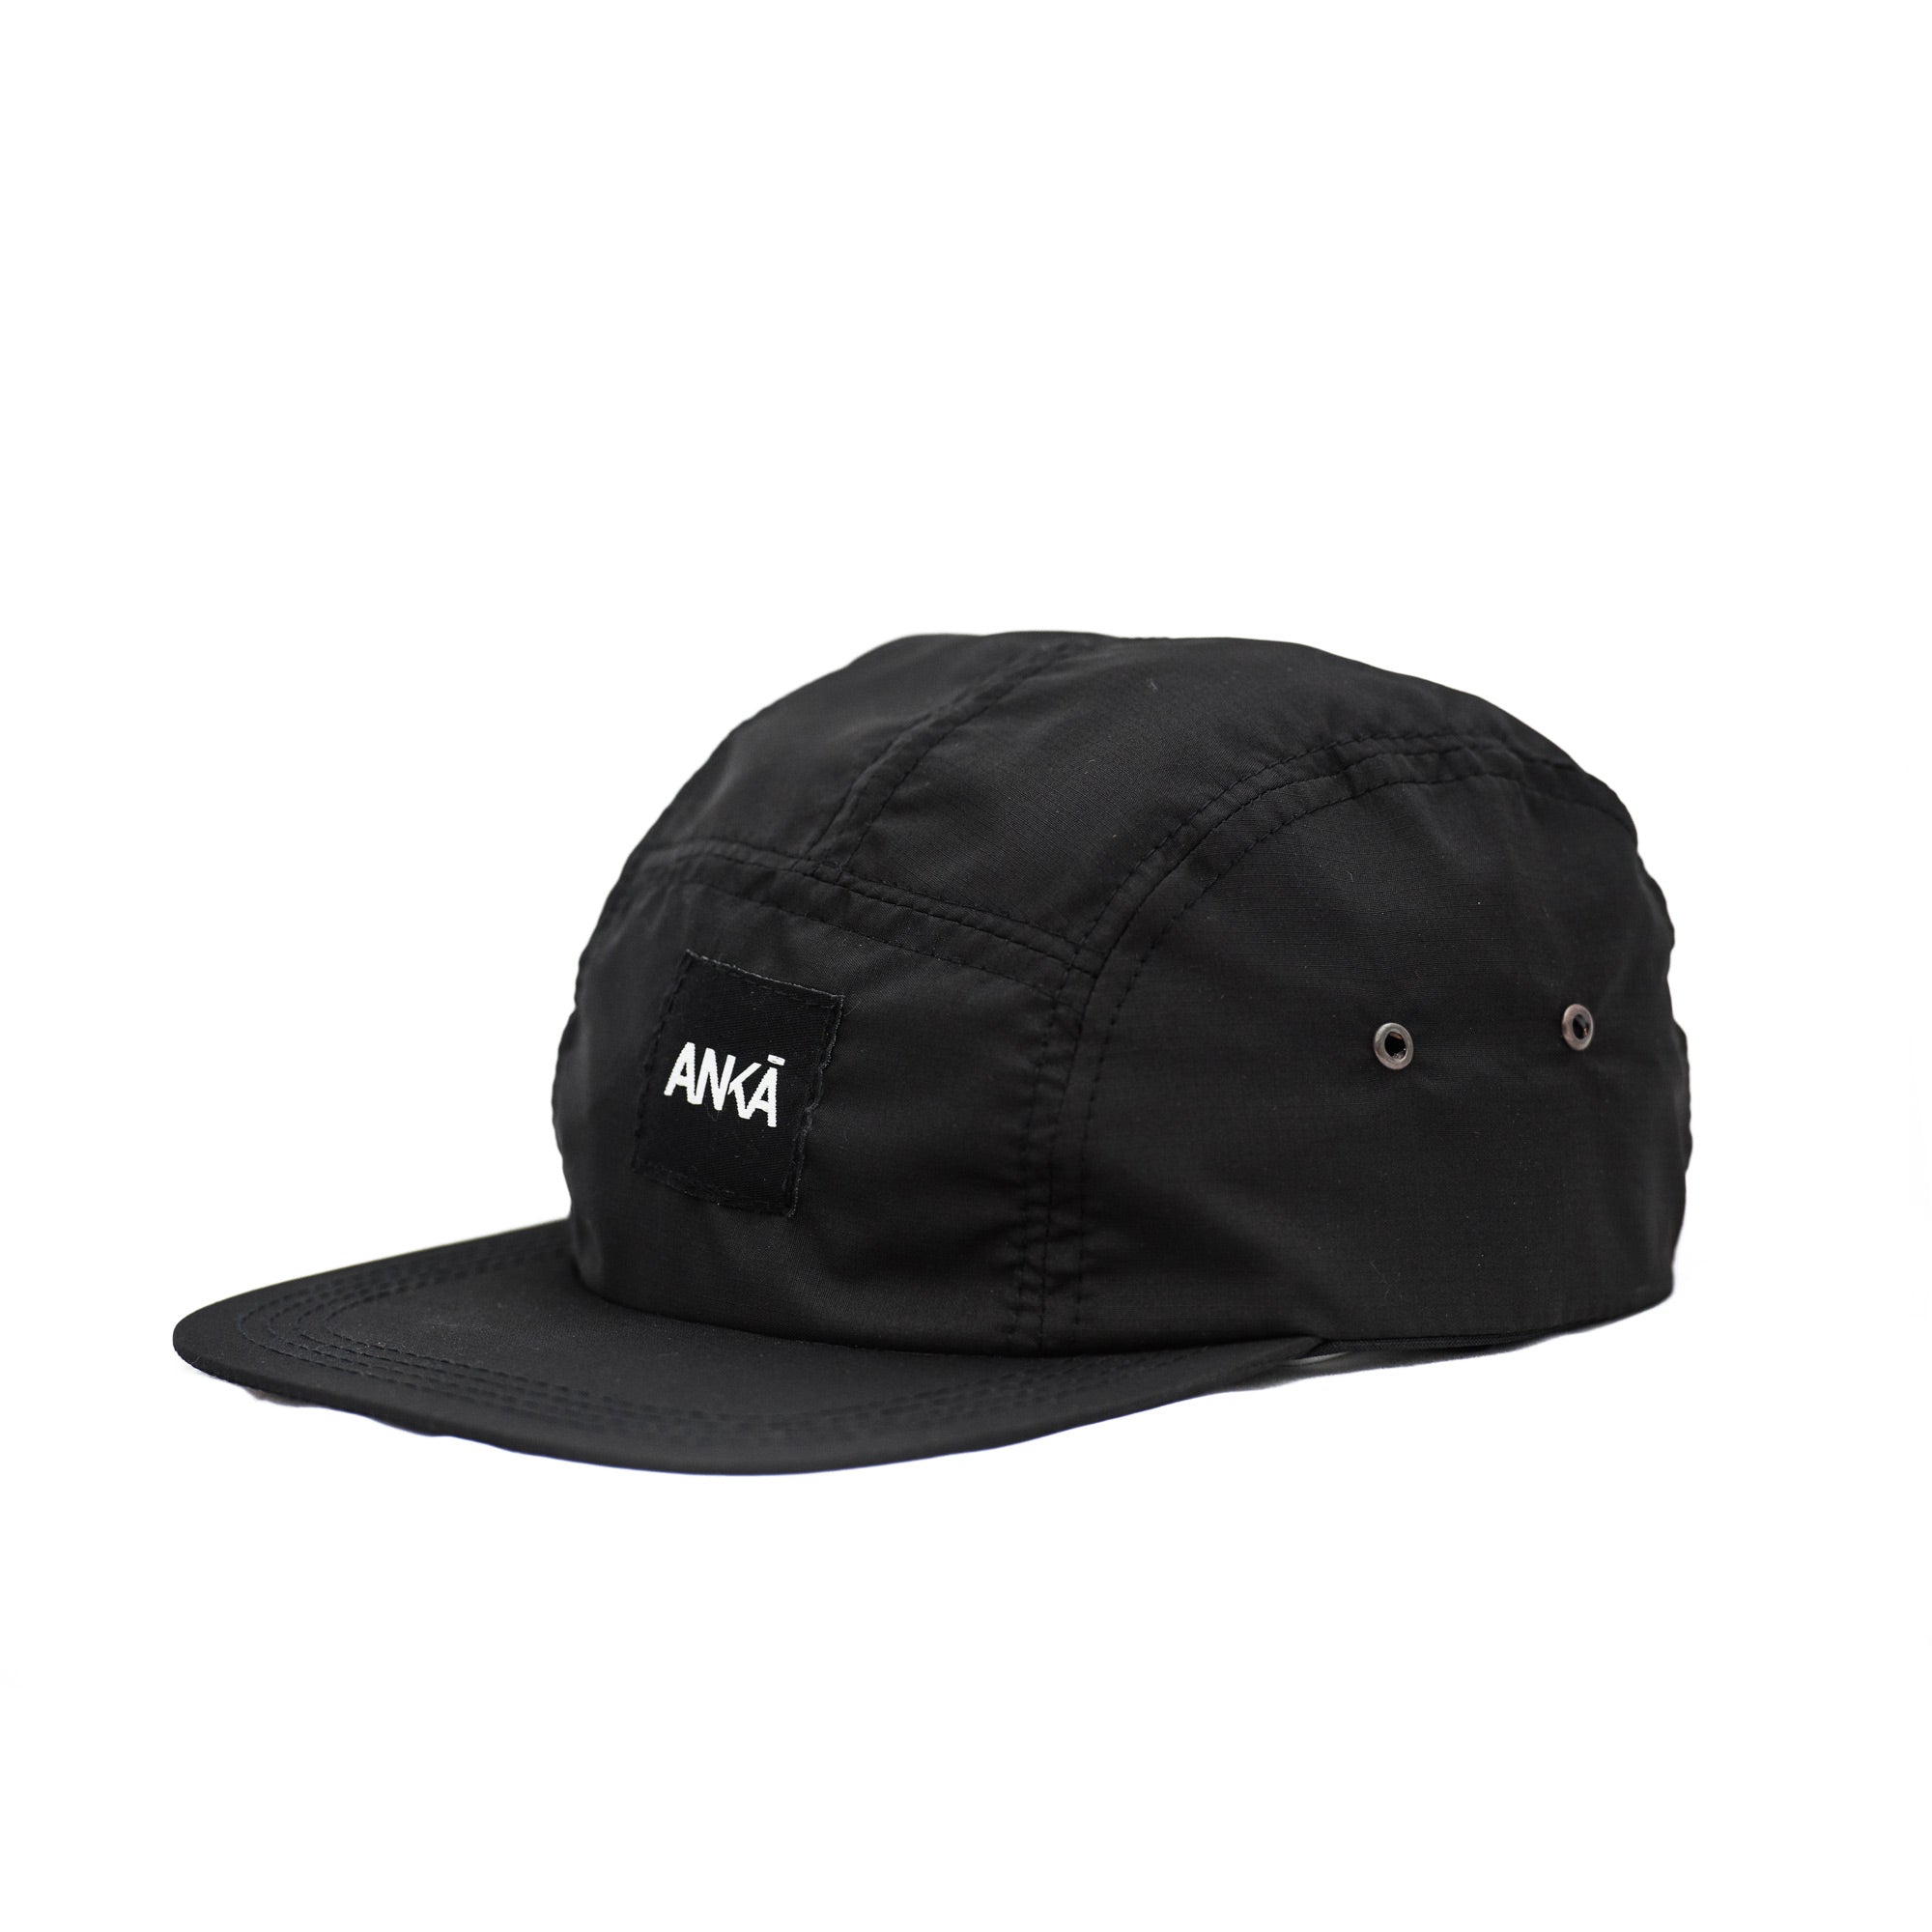 BLACK 5 PANEL HAT